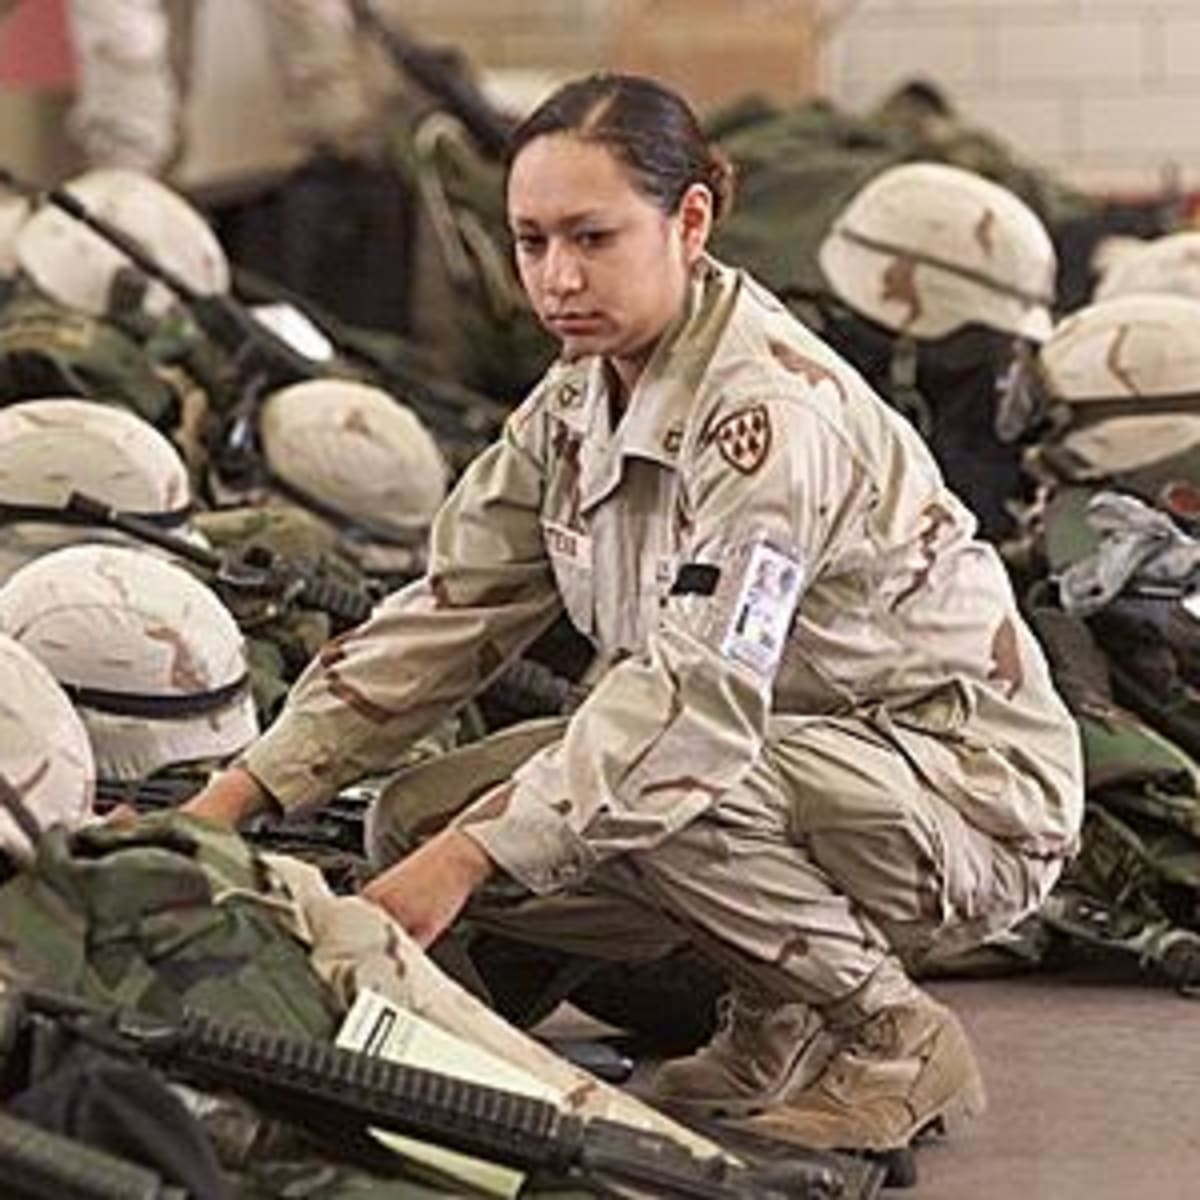 U.S. Army Specialist Lori Piestewa, killed in action in Iraq on March 23, 2003 #MemorialDayWeekend